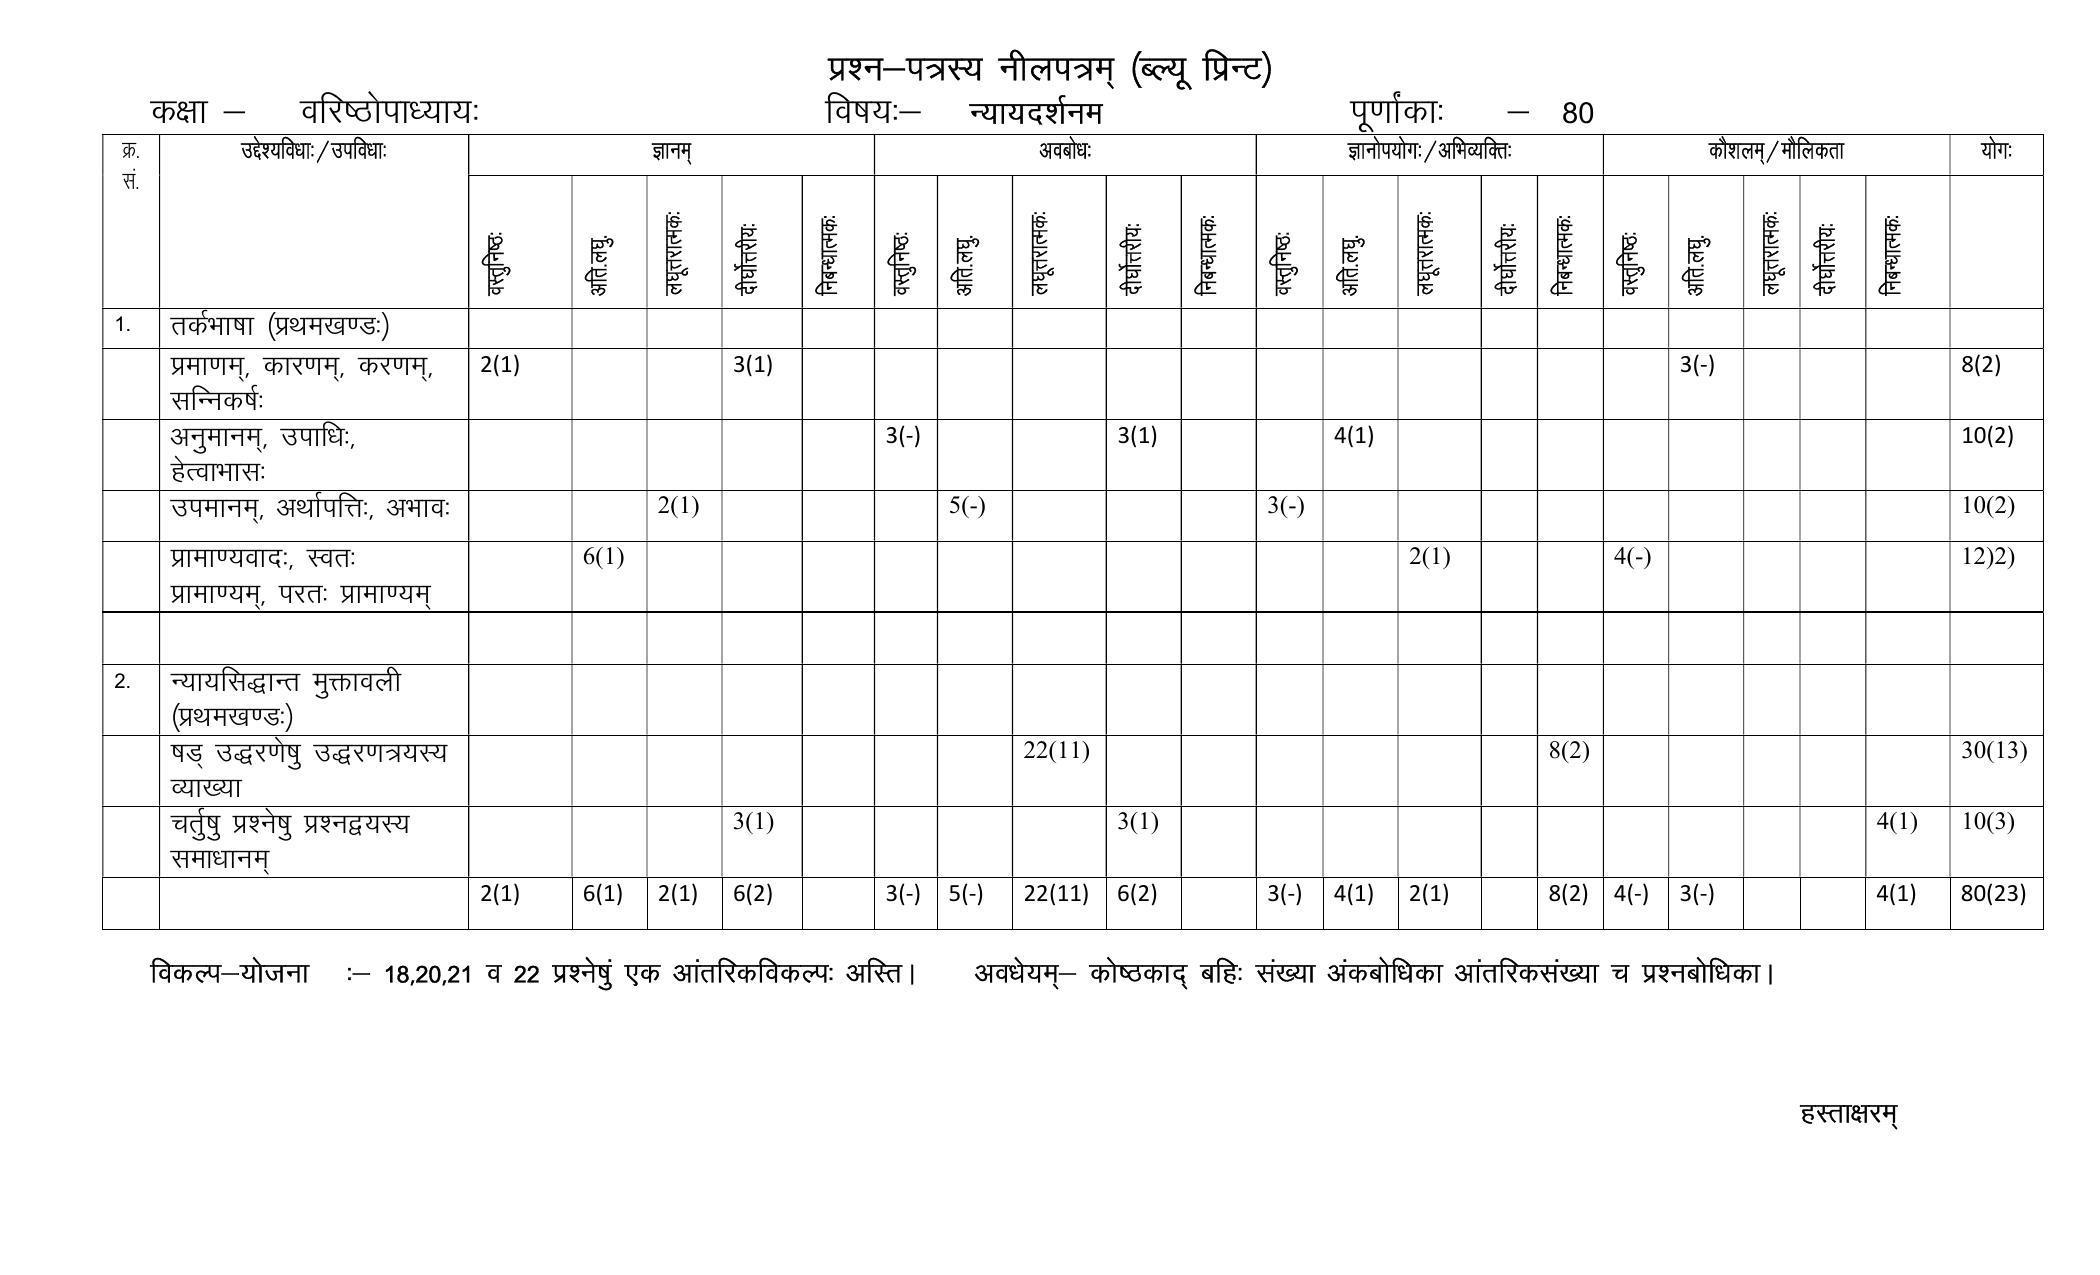 RBSE 2023 NYAYA DARSHANM Varishtha Upadhyay Paper - Page 4